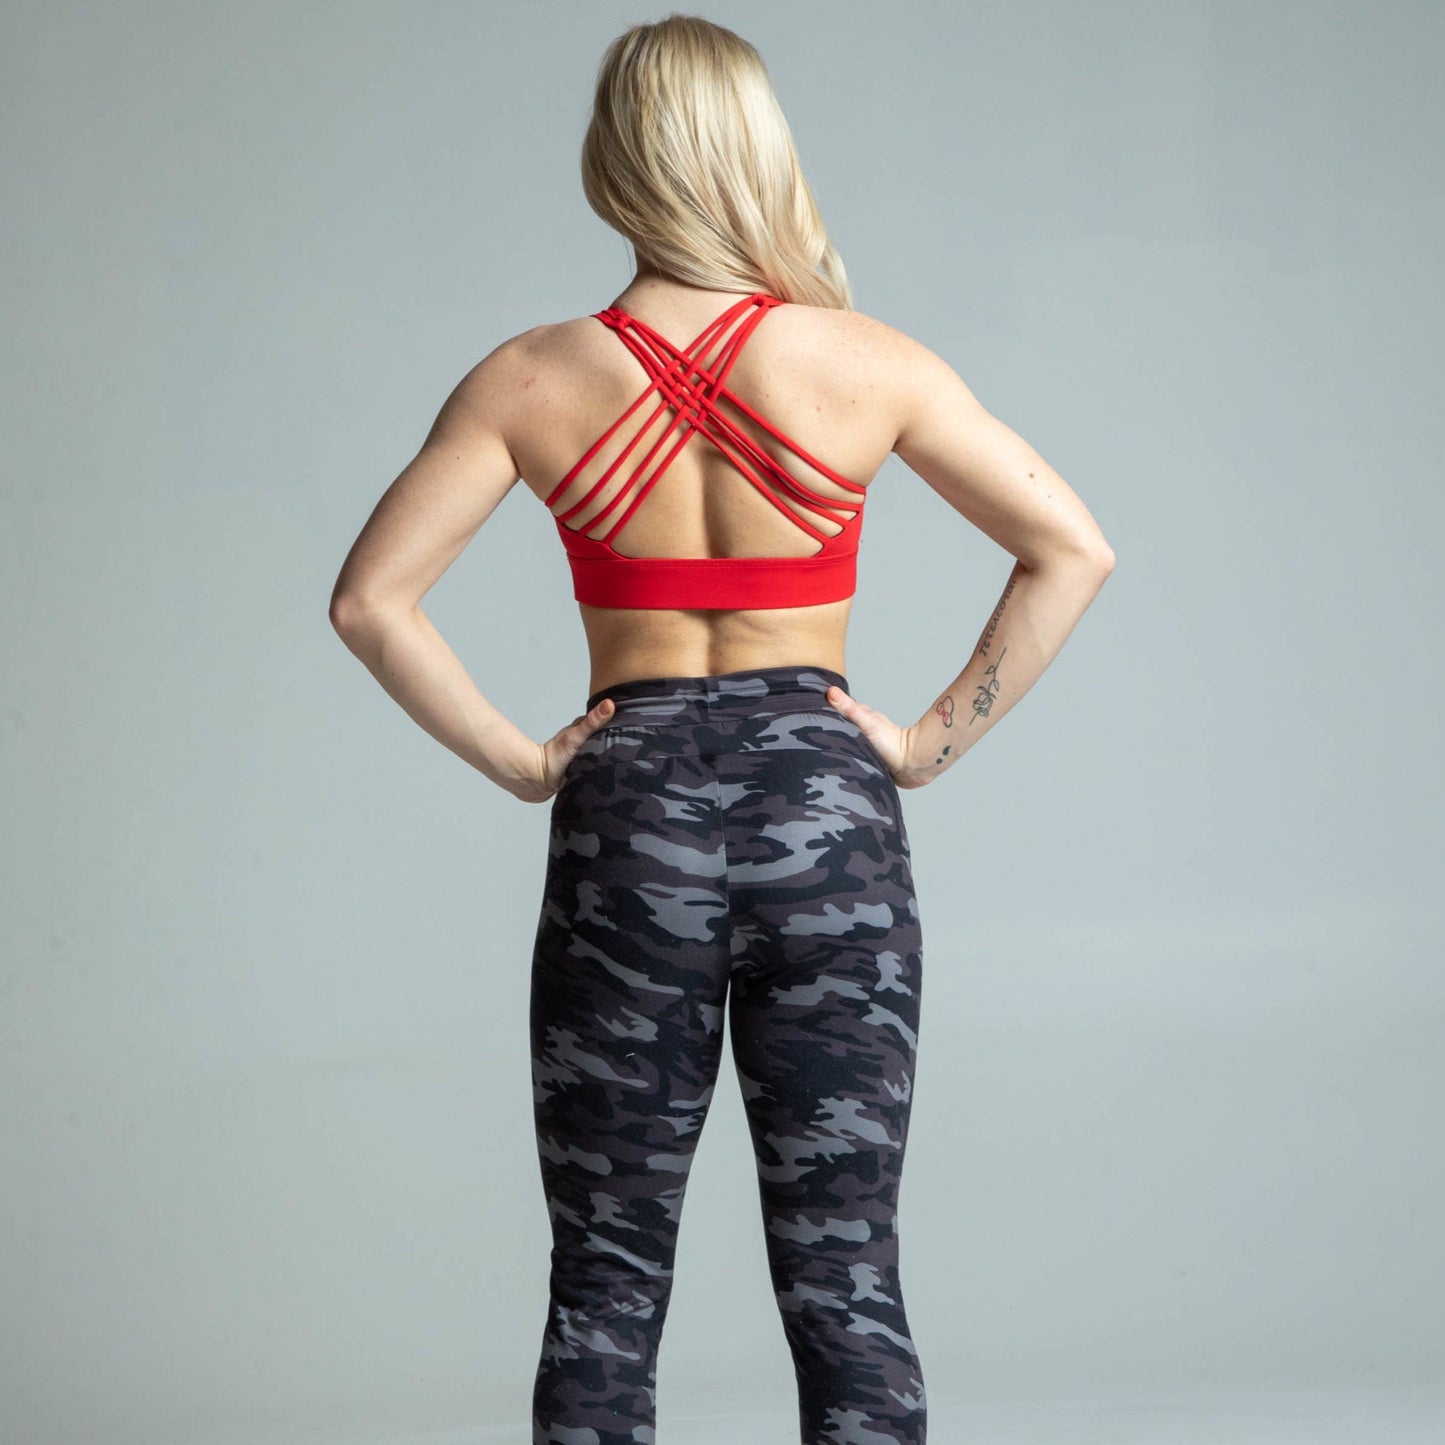 Back view of woman wearing red cross-back sports bra